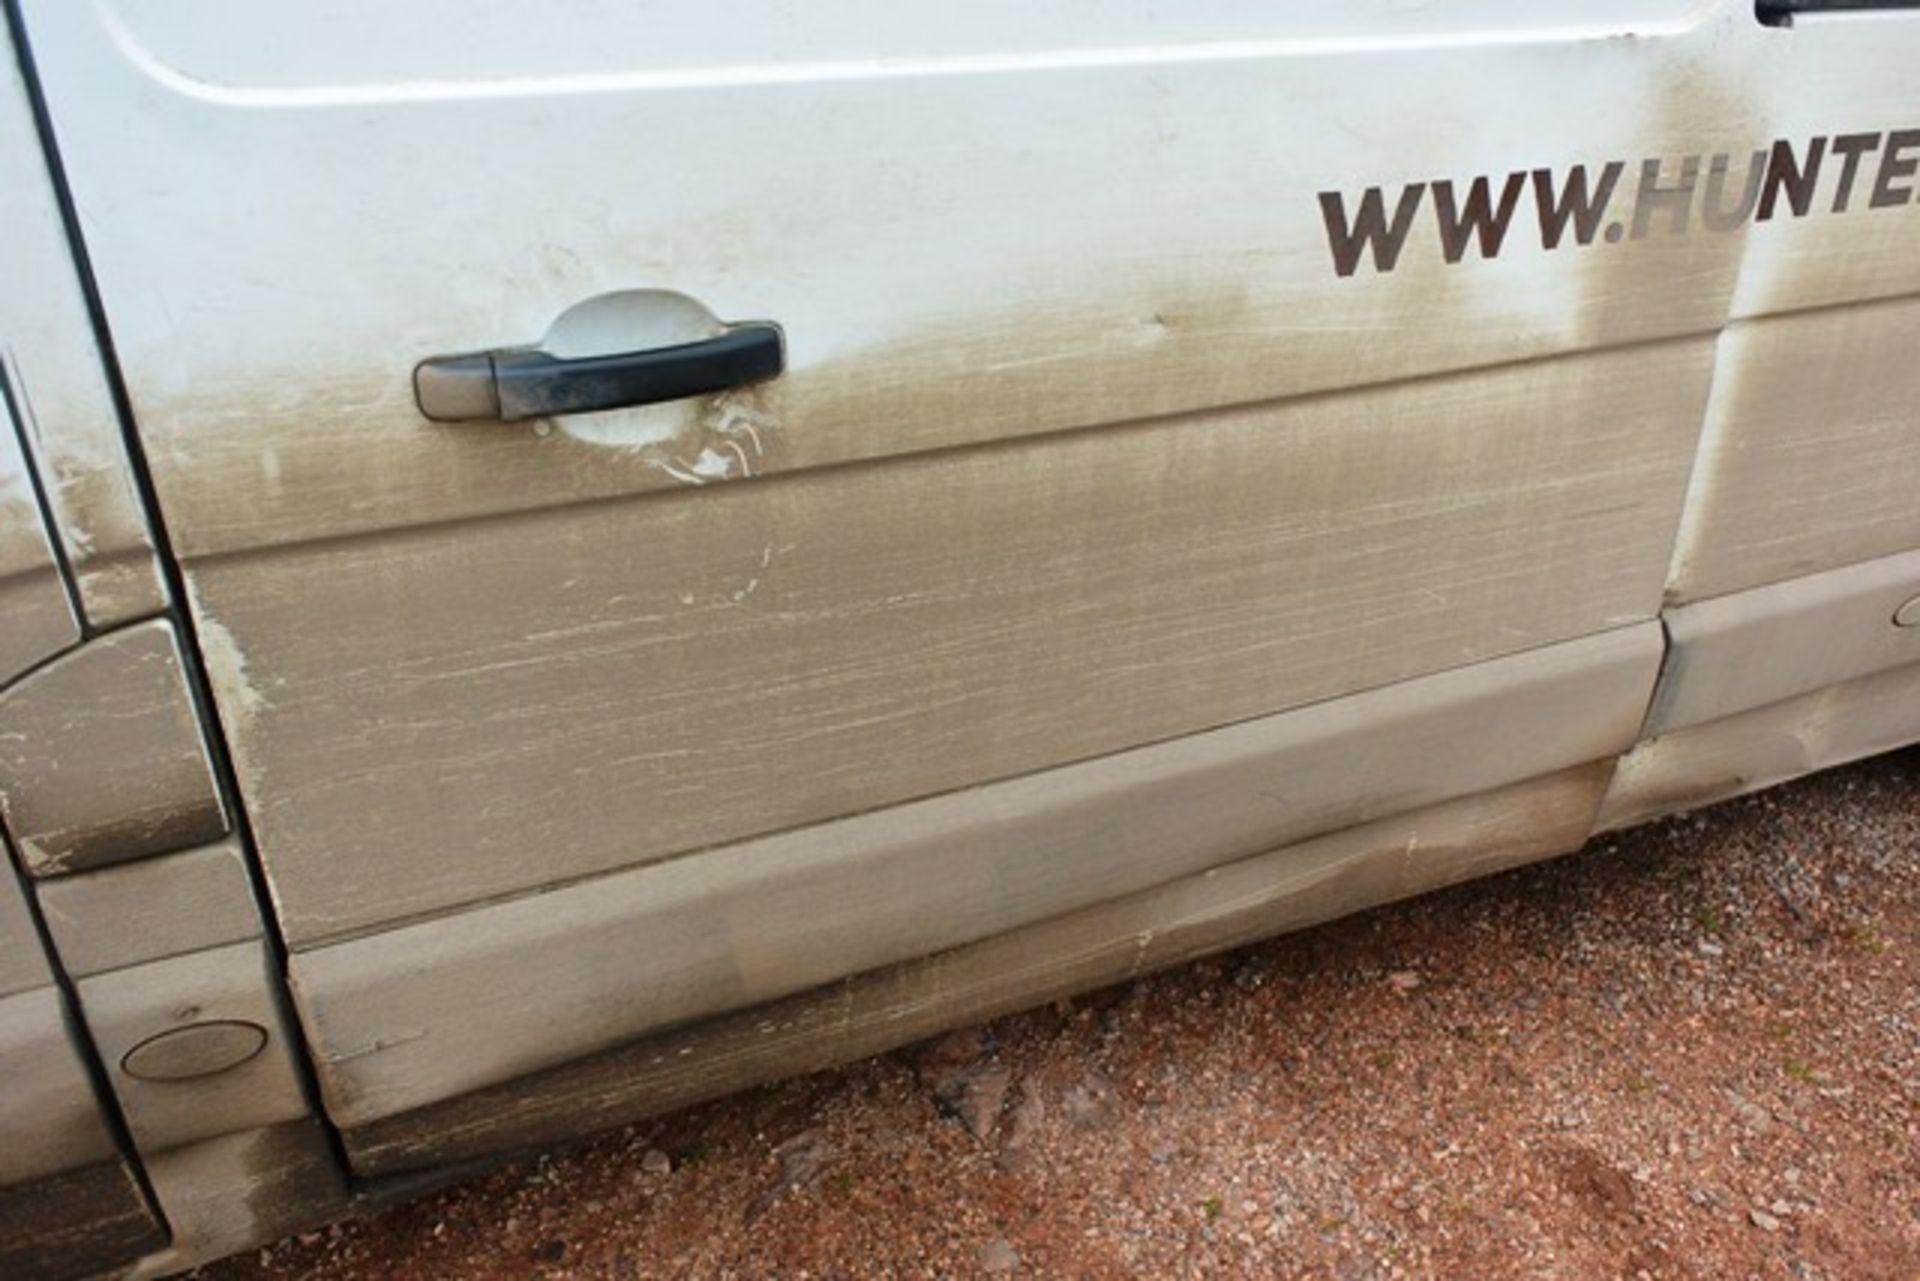 Renault Master panel van, reg no. WF66 UAL (please note: front bumper damage, drivers side panel - Image 11 of 14